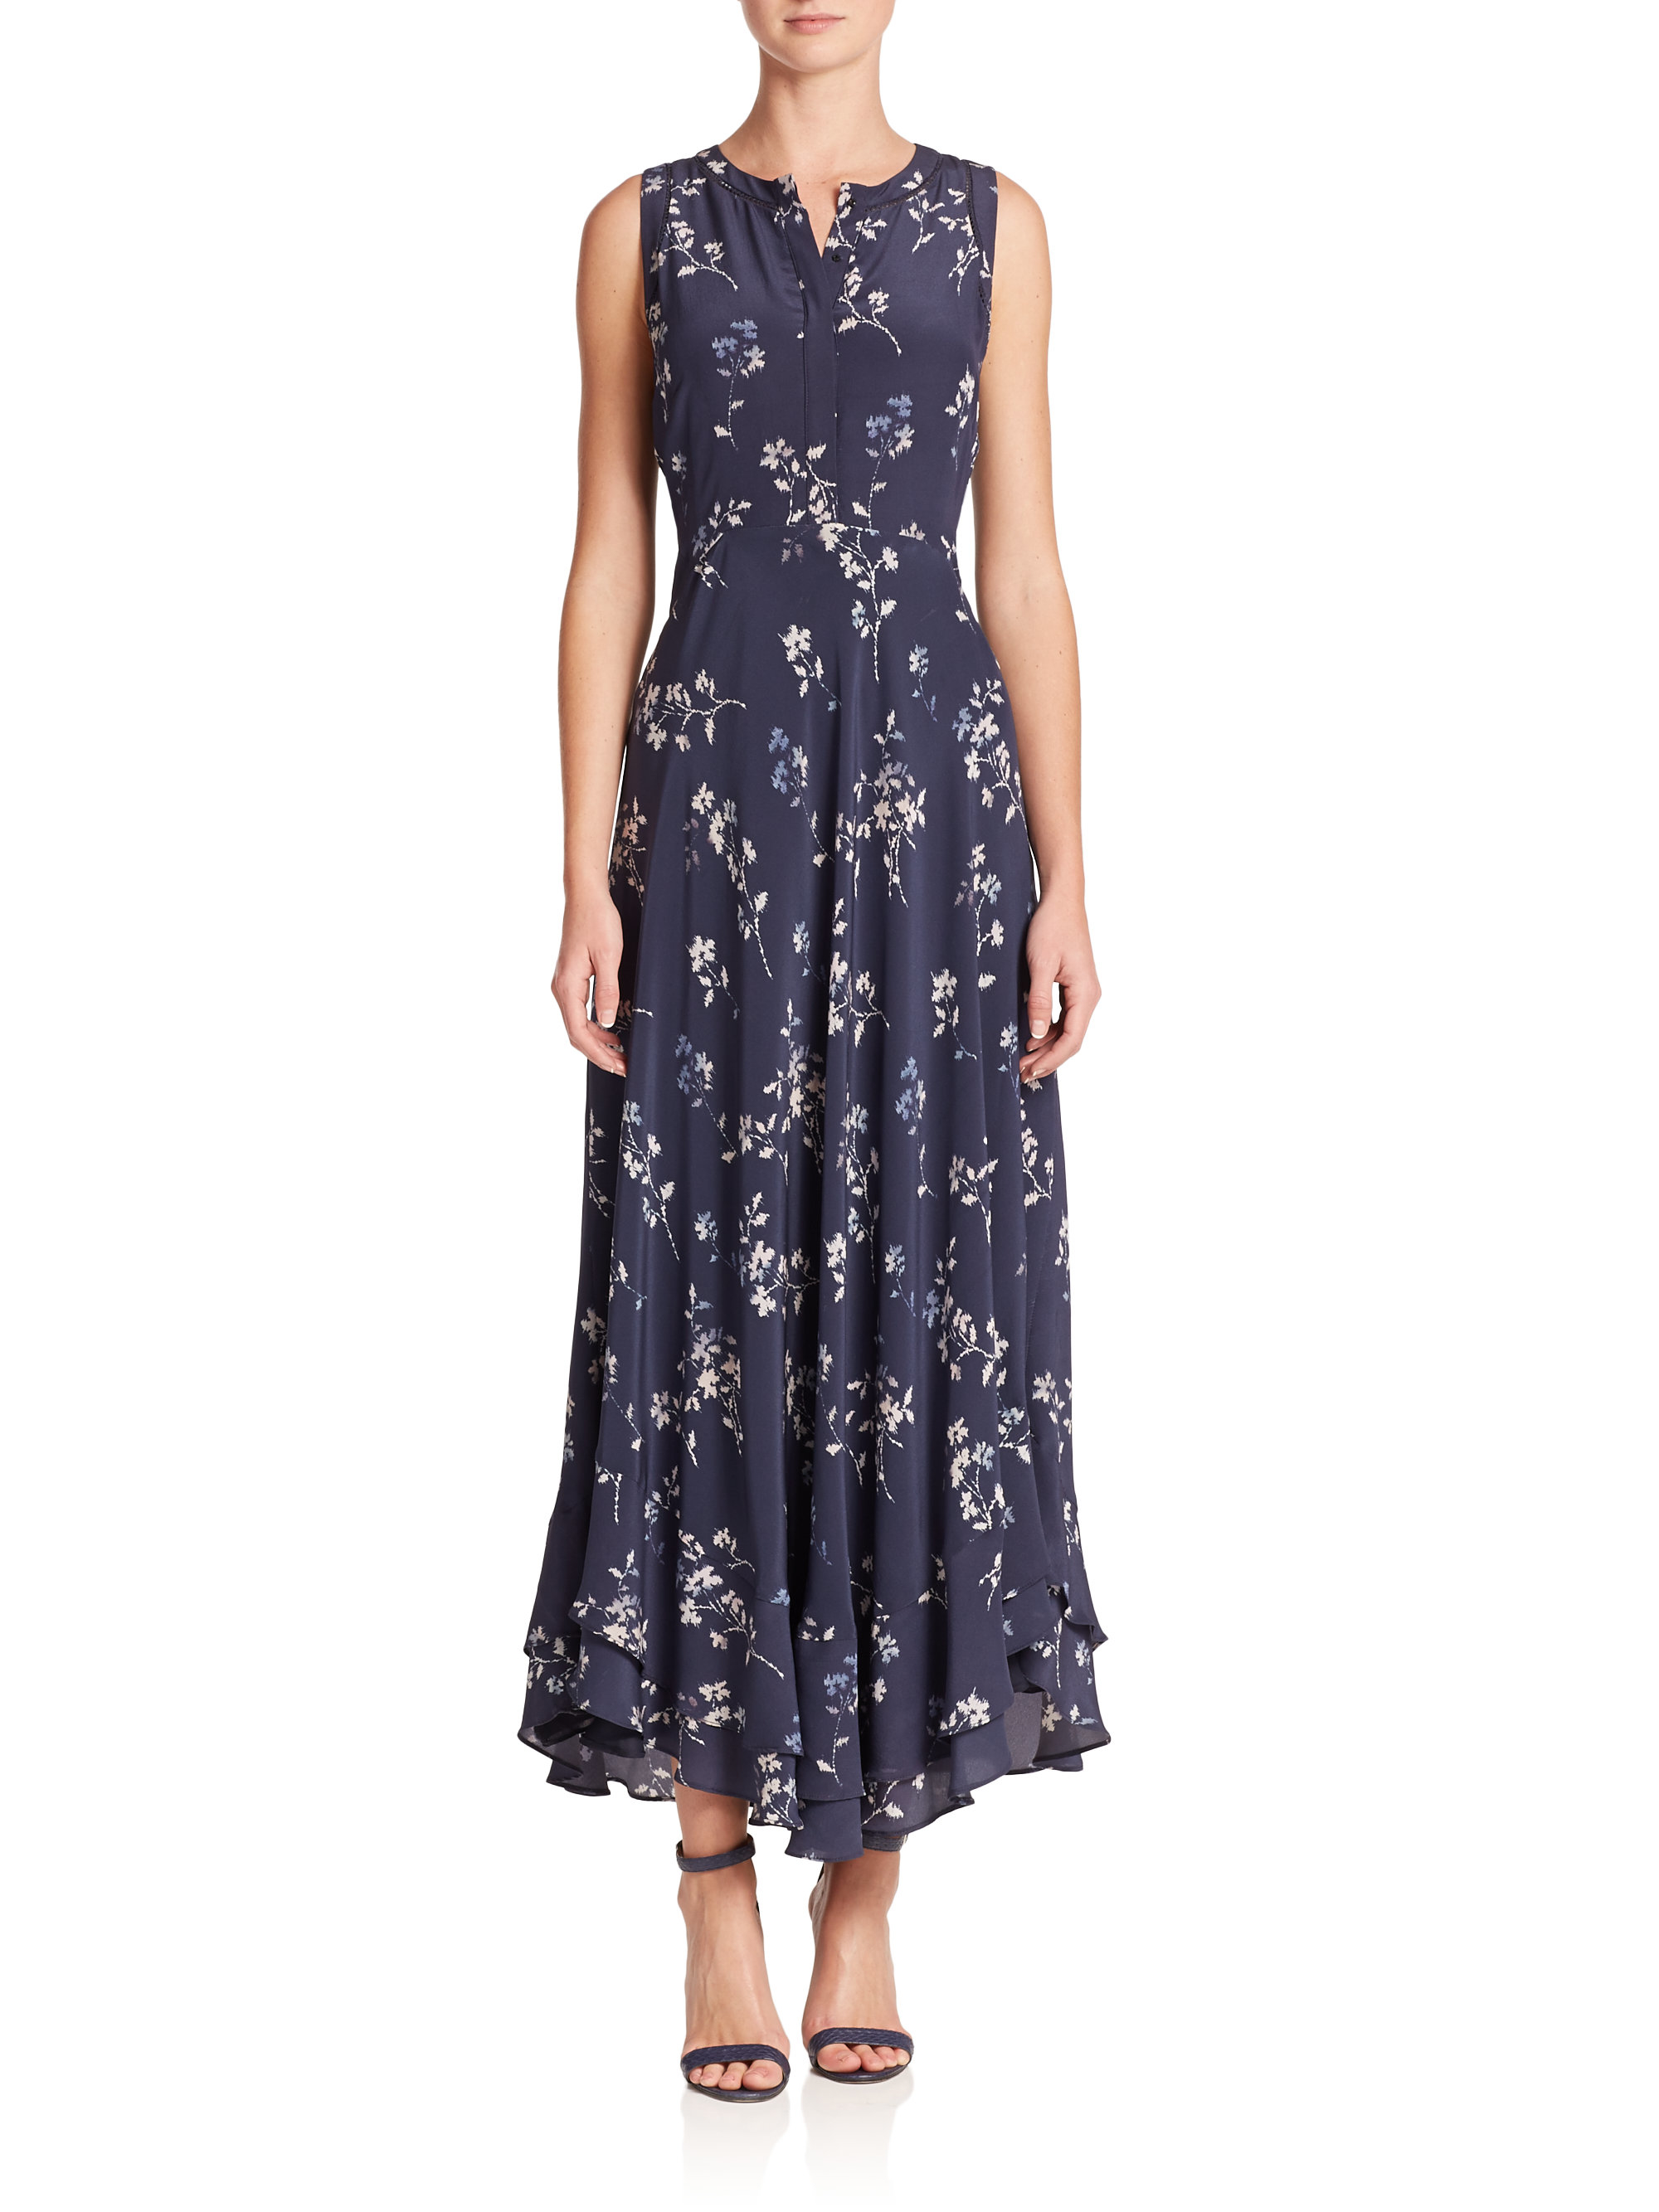 Lyst - Rebecca Taylor Silk Floral-print Ruffle Maxi Dress in Blue